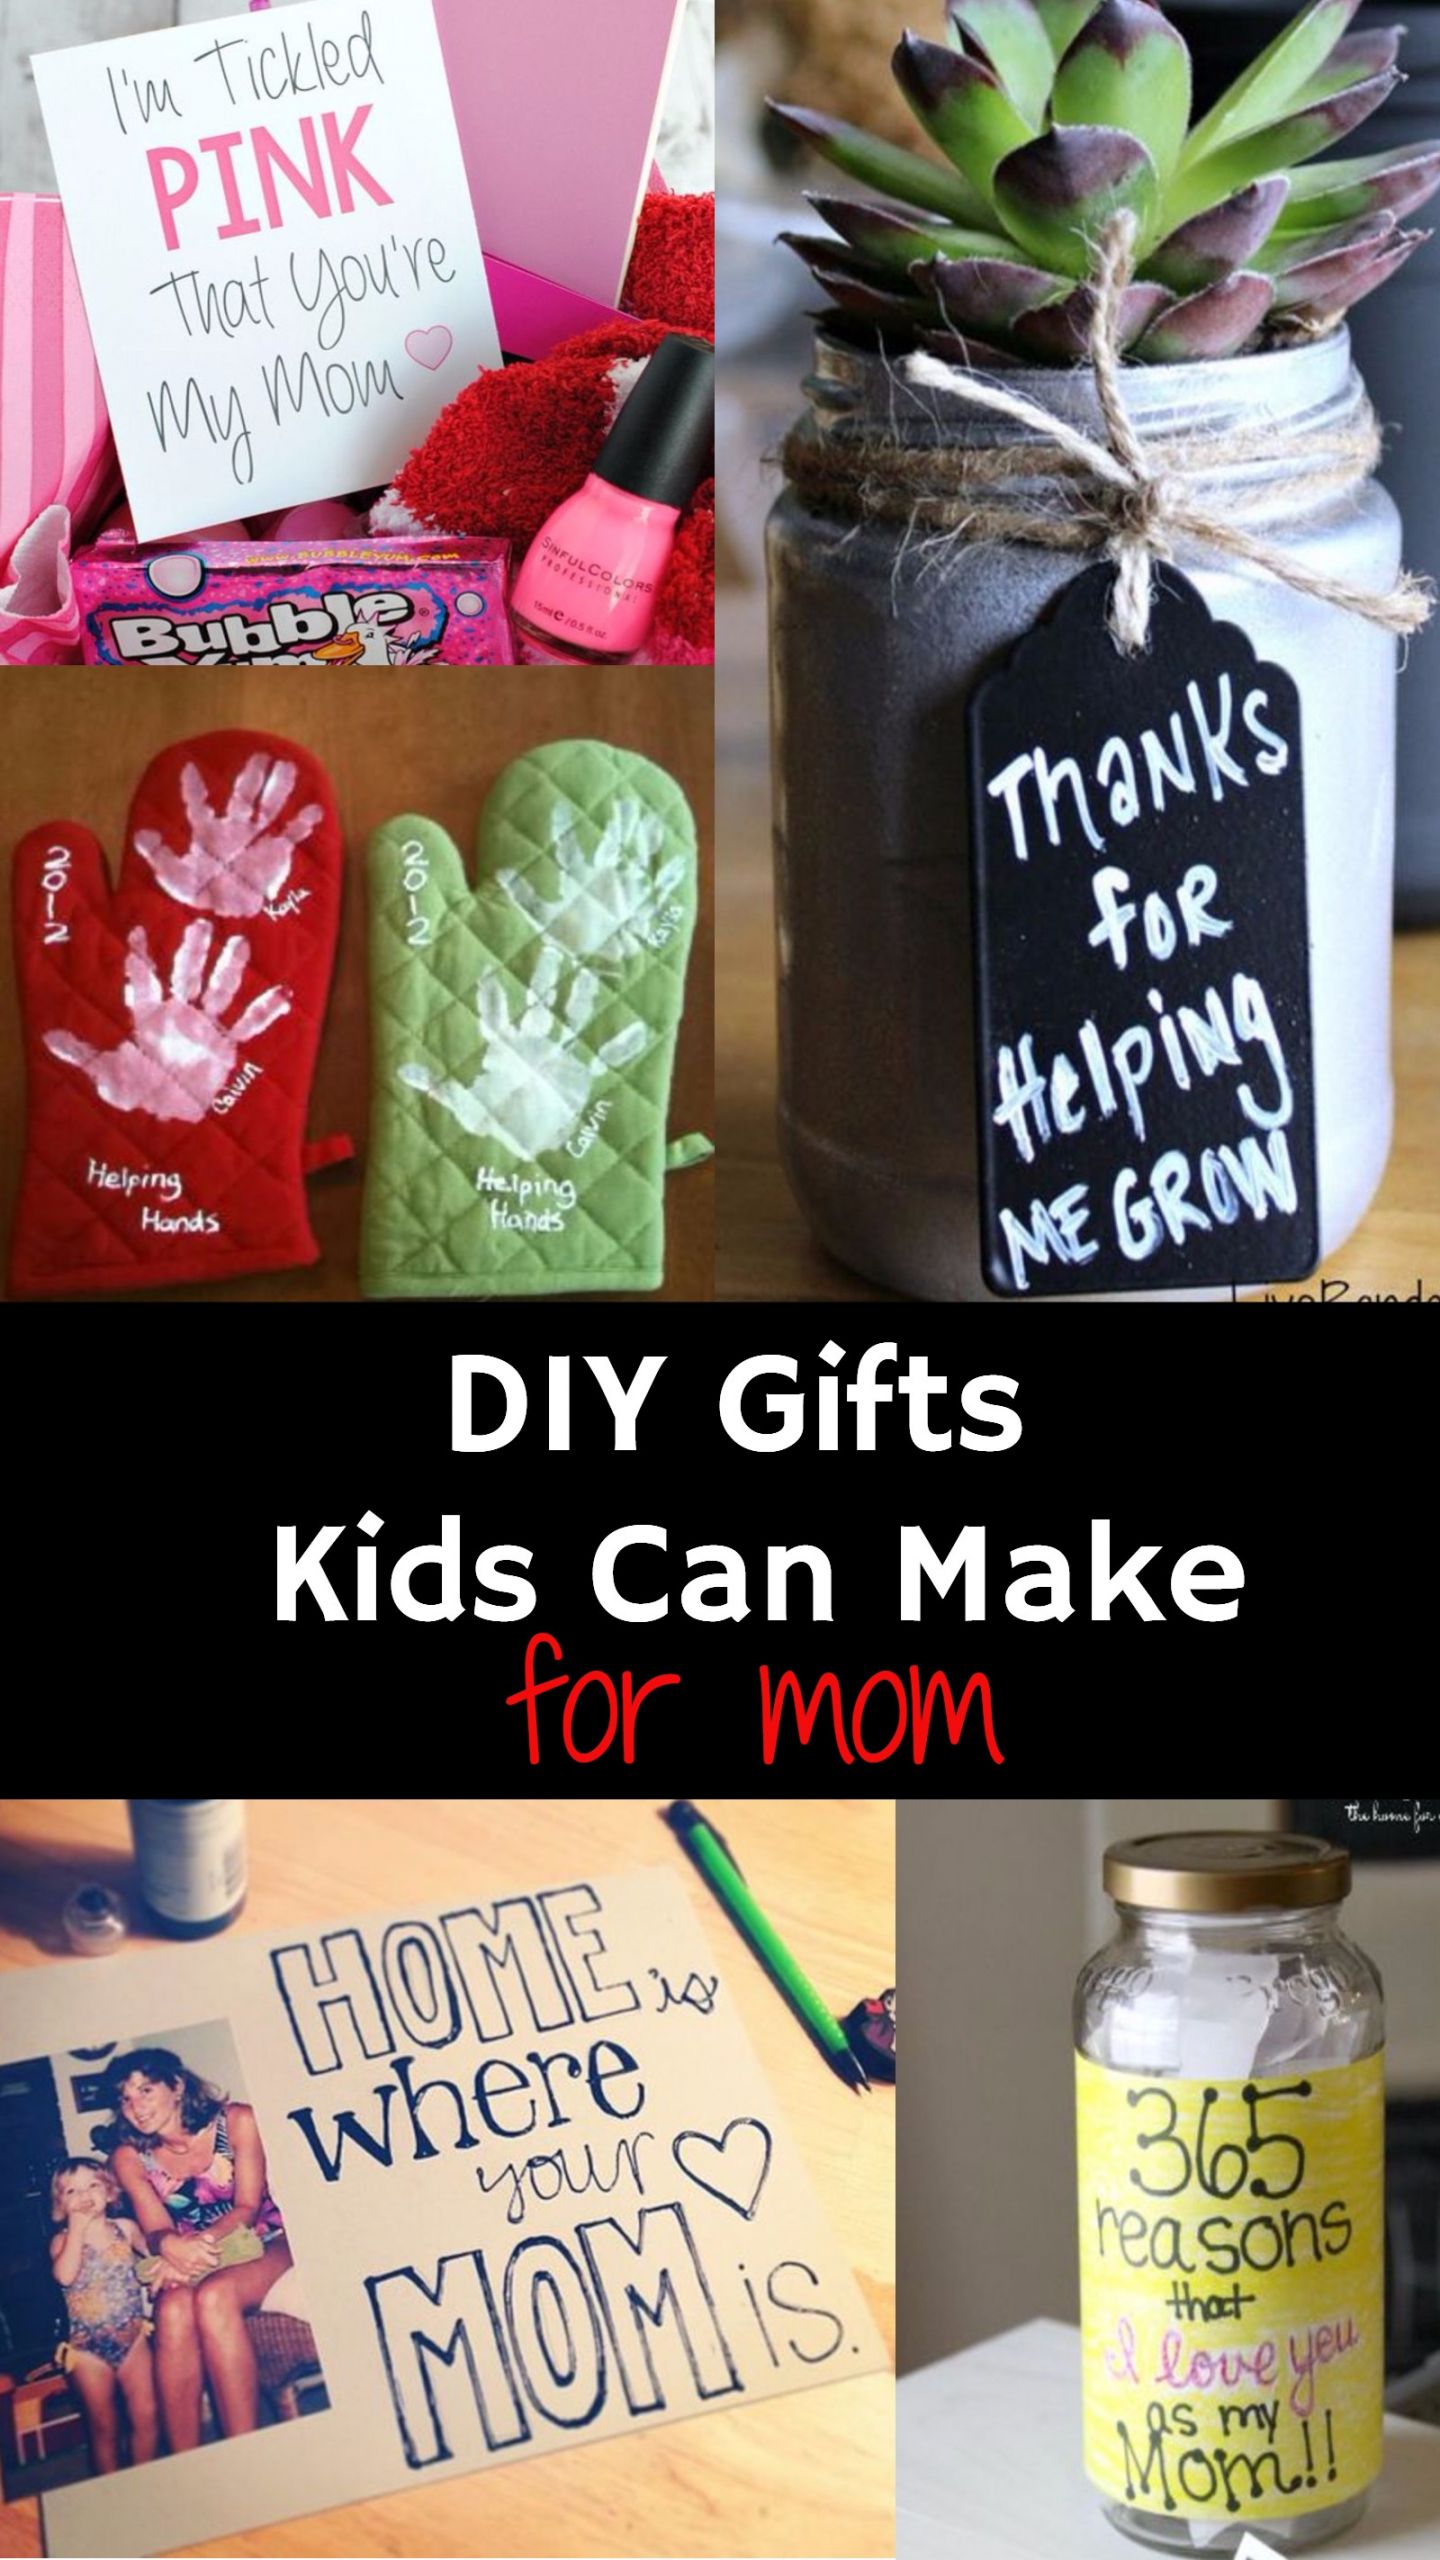 65Th Birthday Gift Ideas For Mom
 10 Fantastic 65Th Birthday Gift Ideas For Mom 2019